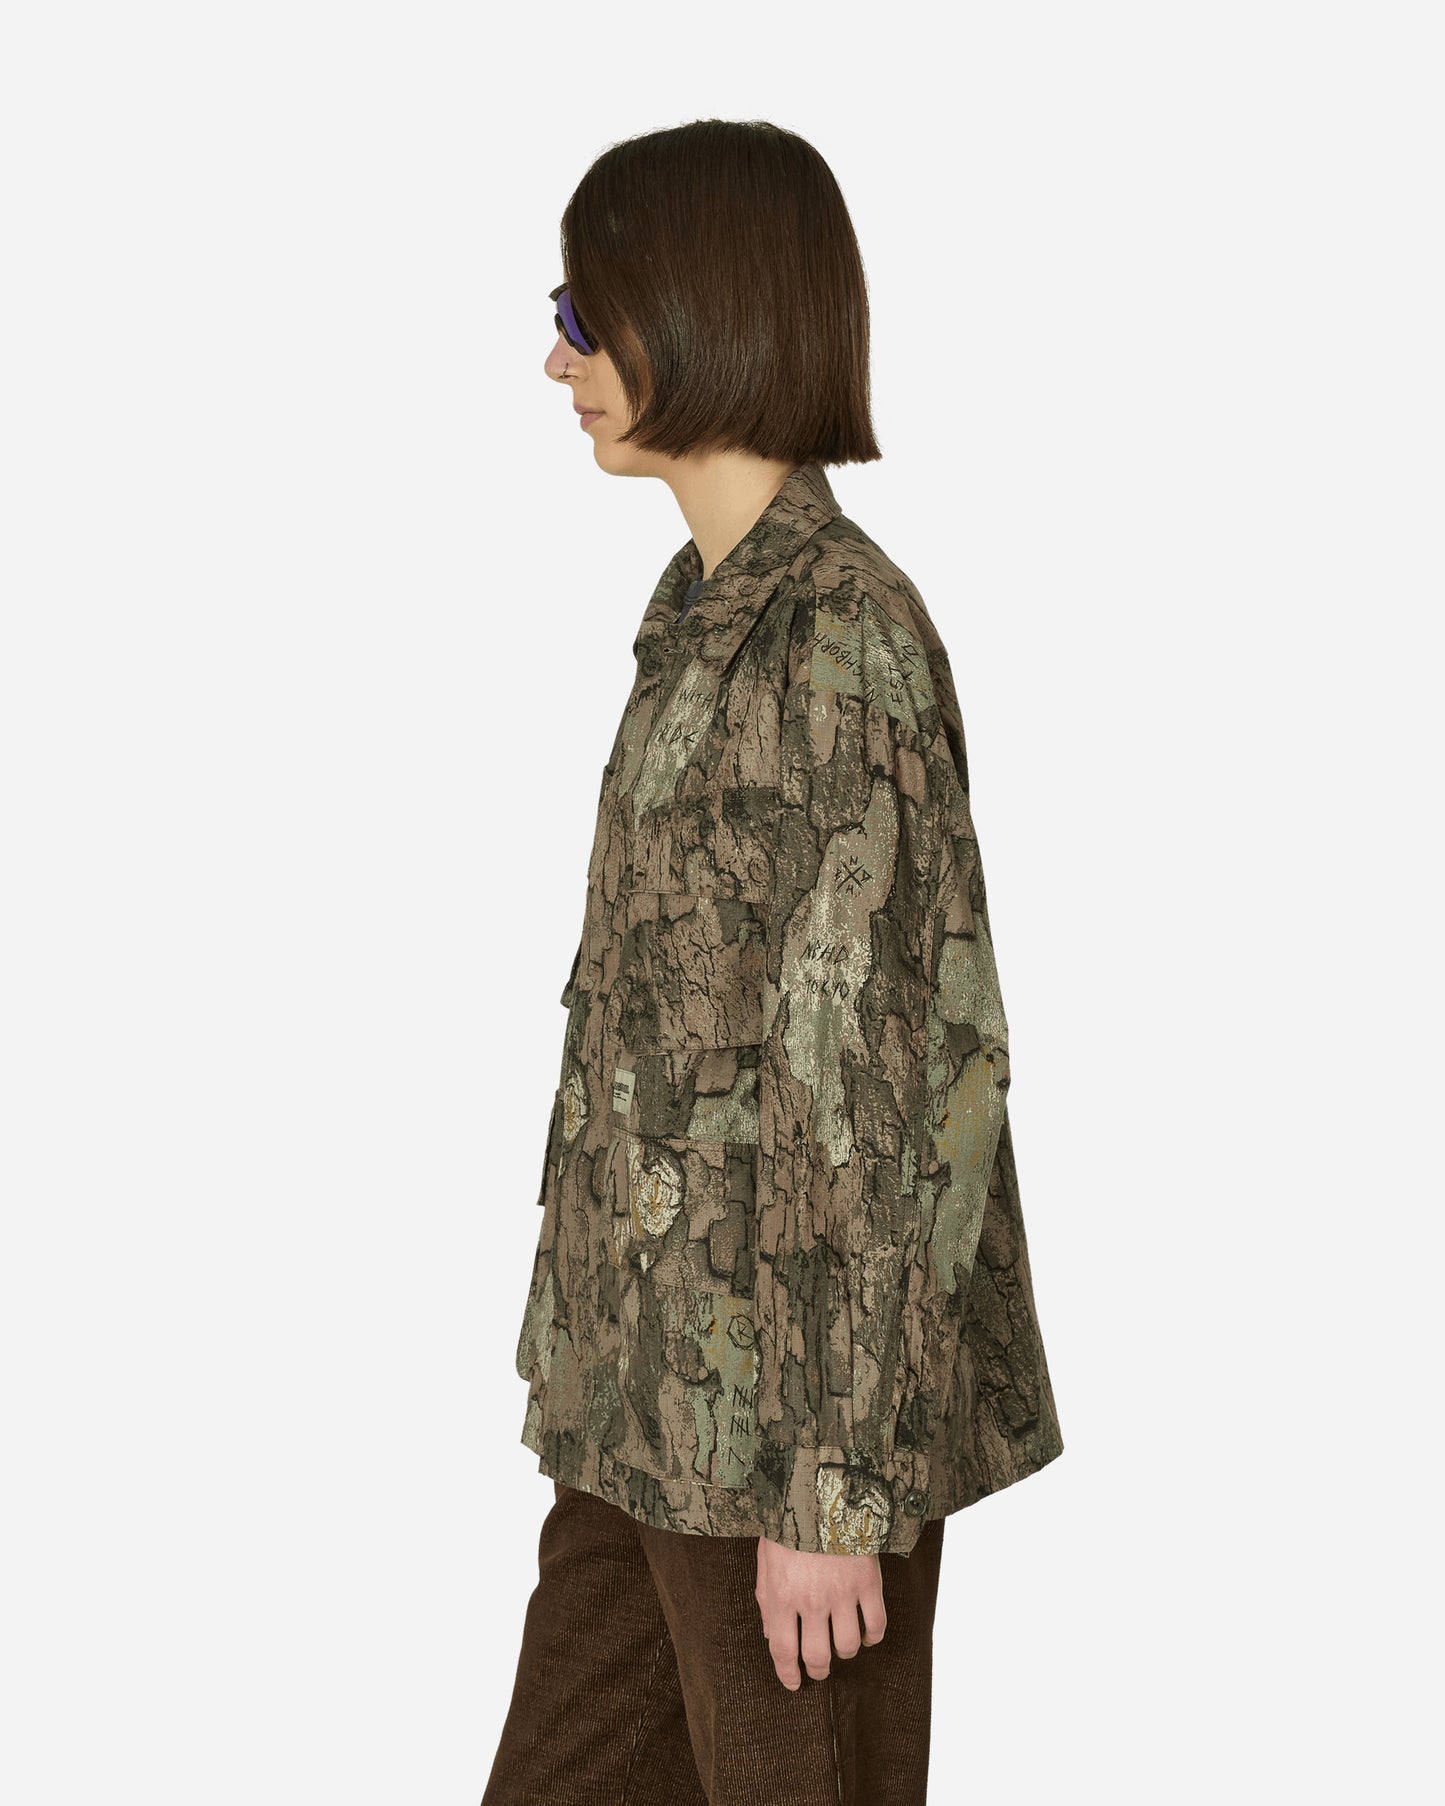 Neighborhood Camouflage Fatigue Jacket Camoflauge Coats and Jackets Jackets 241AQNH-JKM02 CM